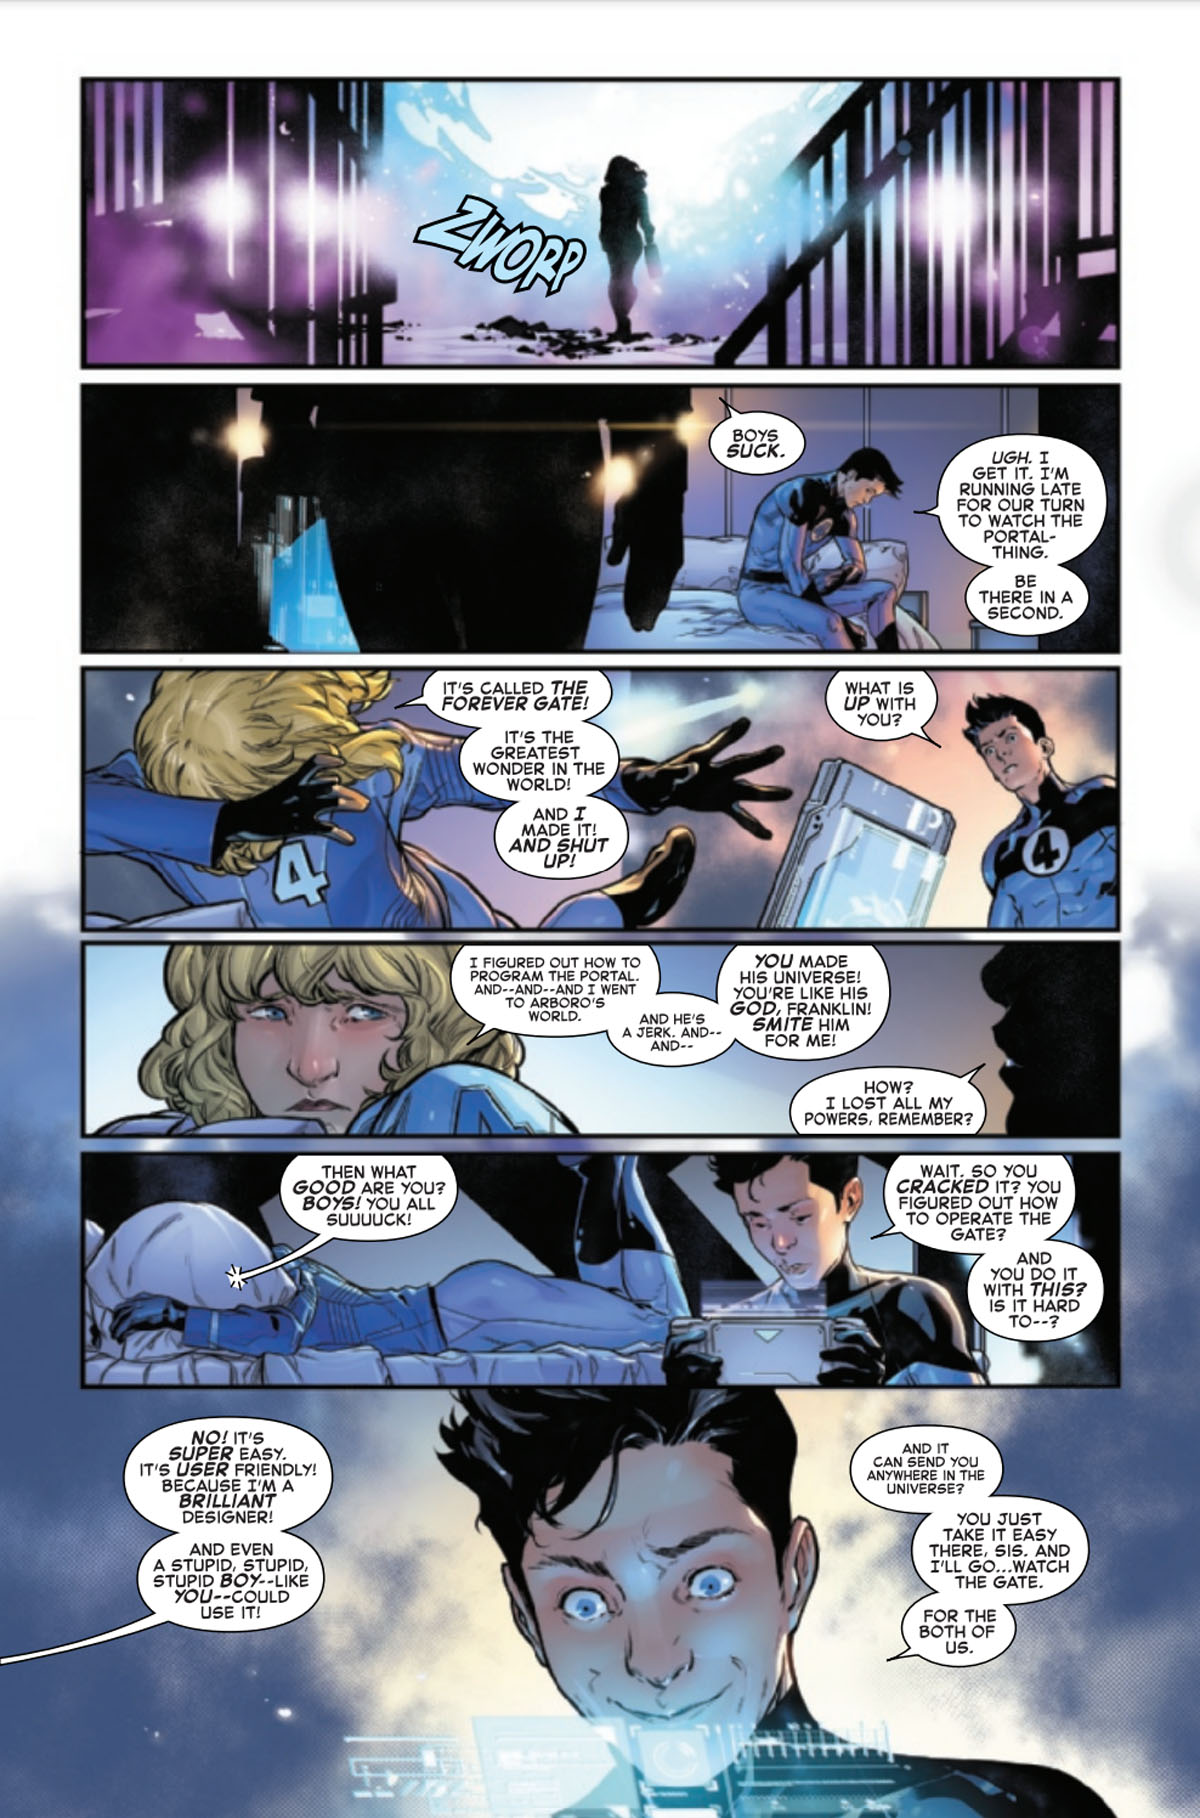 Fantastic Four #26 page 4